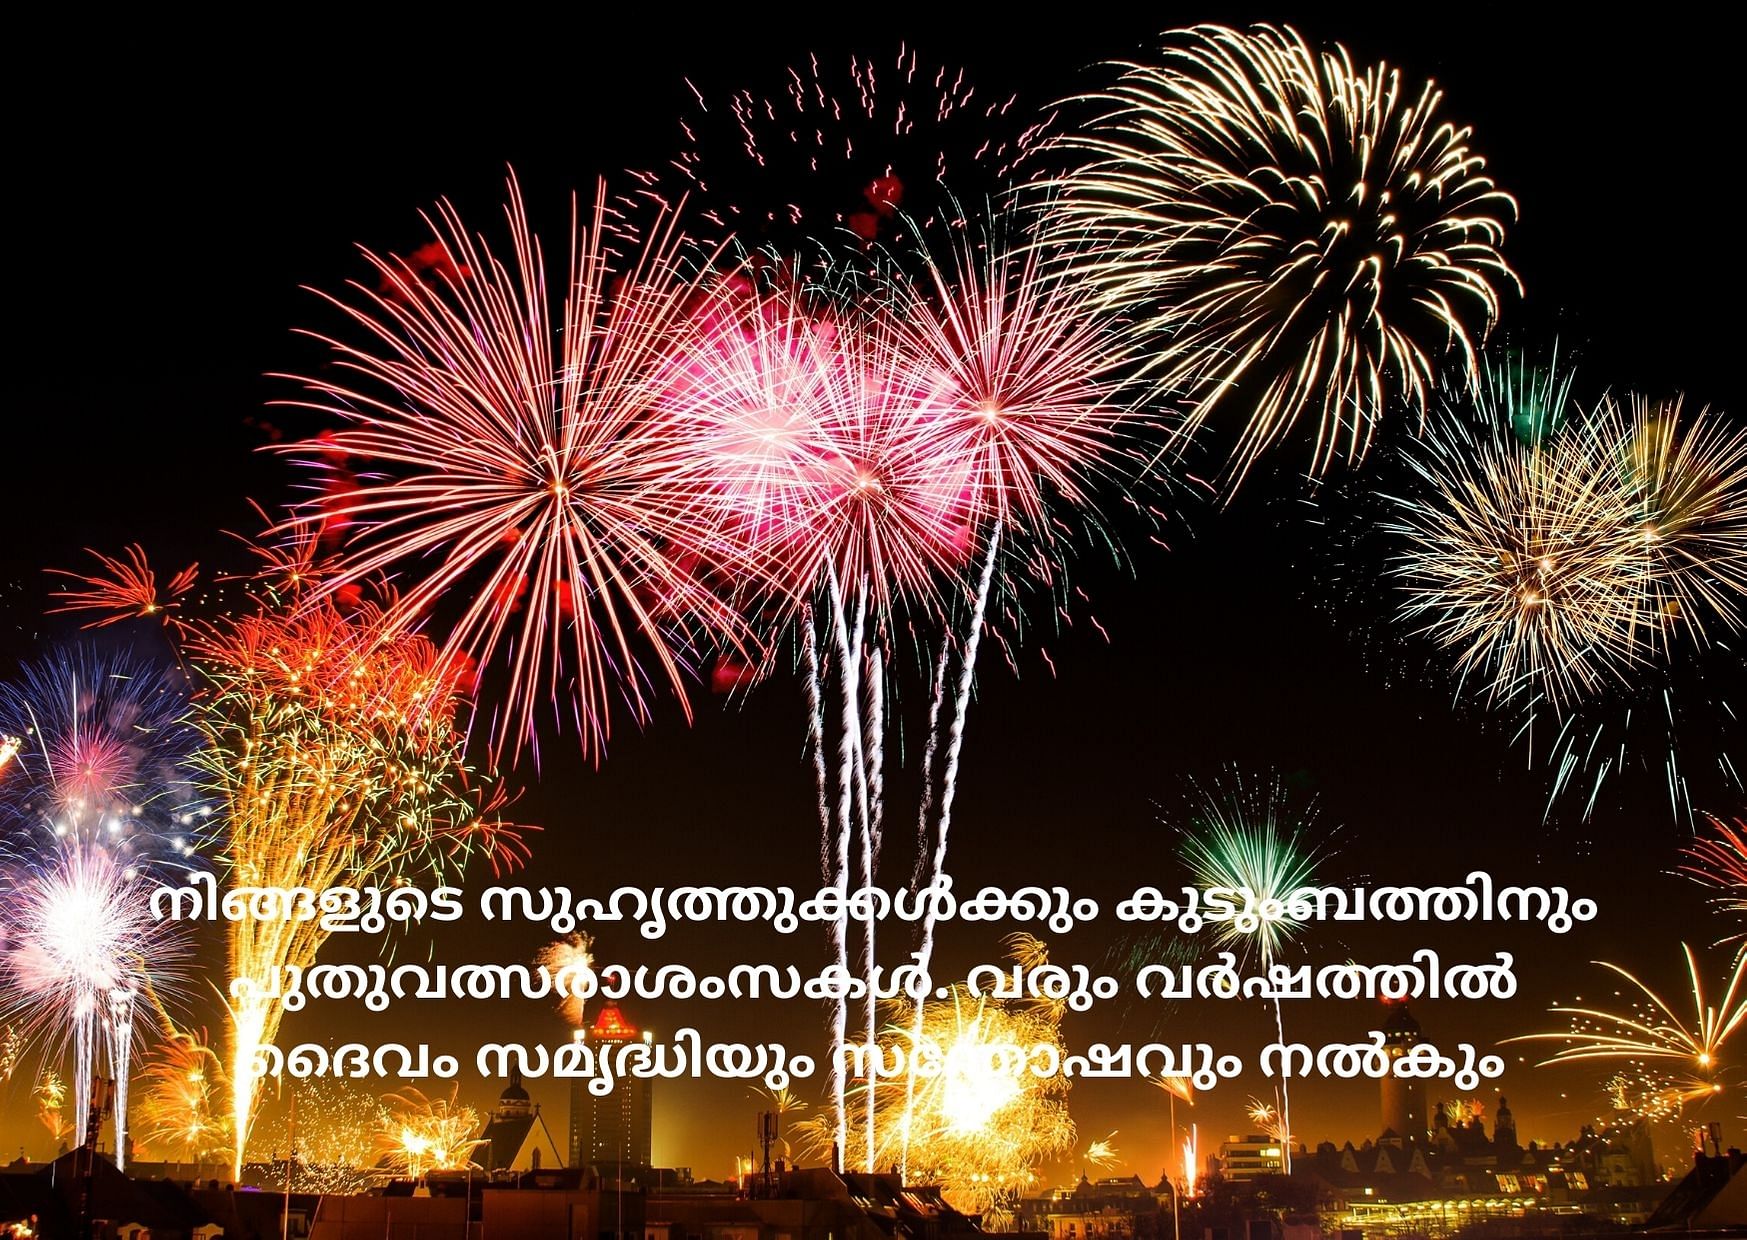 Happy New Years 2021 Wishes in English Tamil,Telugu,Malayalam,Kannada